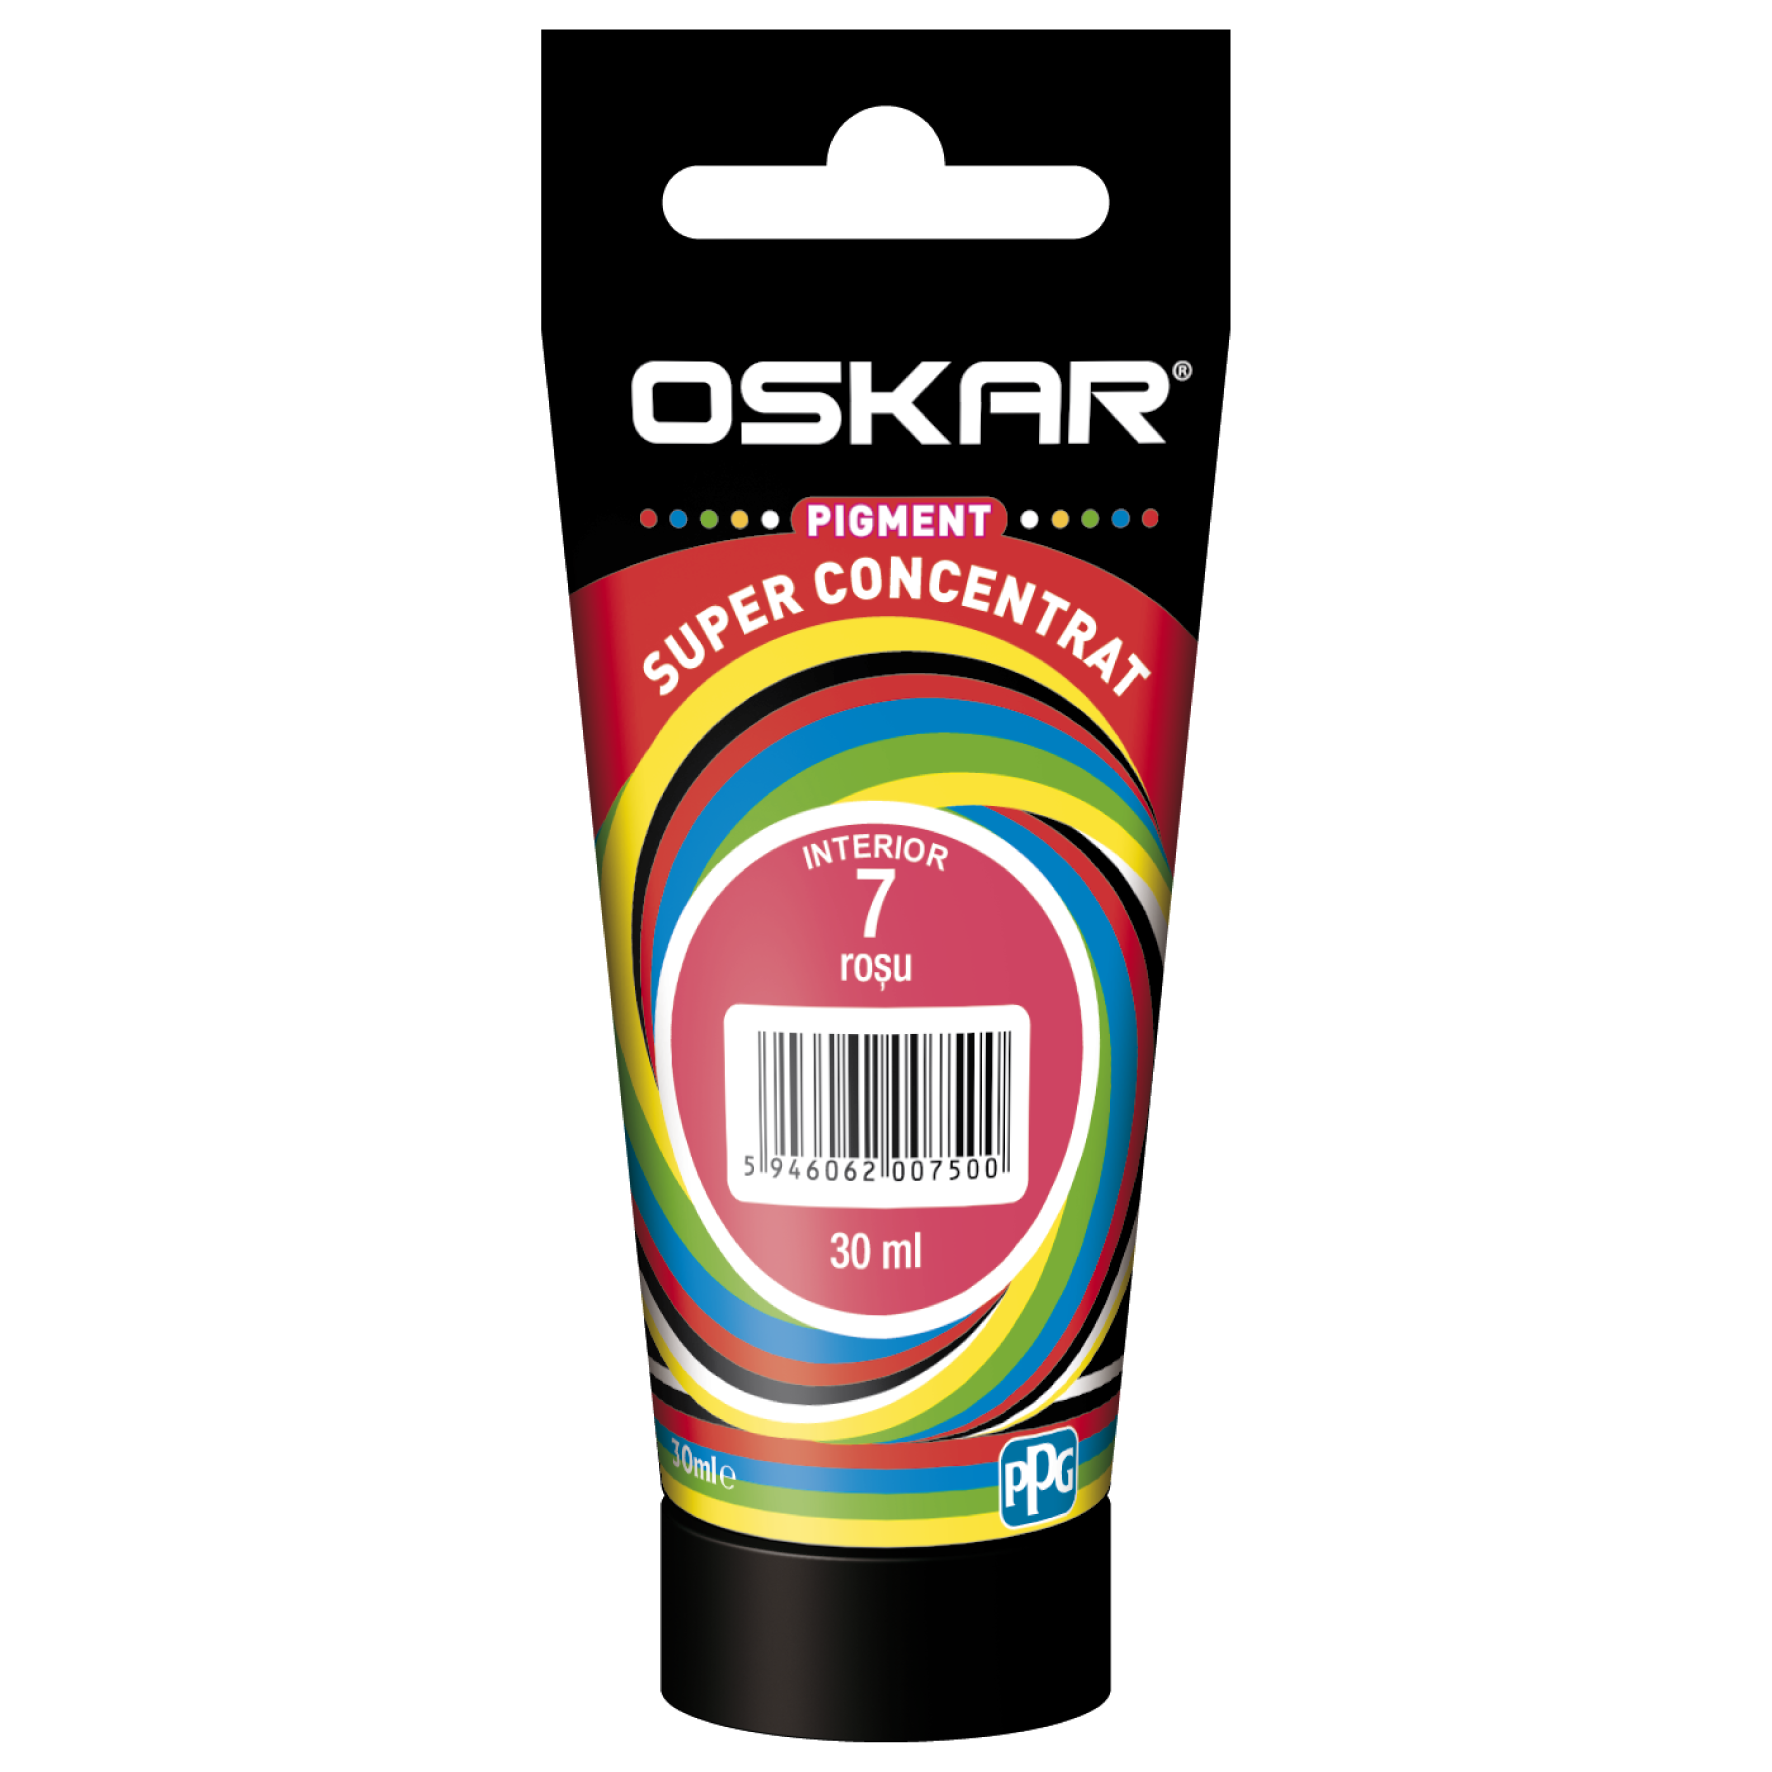 Pigment vopsea lavabila Oskar super concentrat, rosu 7, 30 ml Coloranti